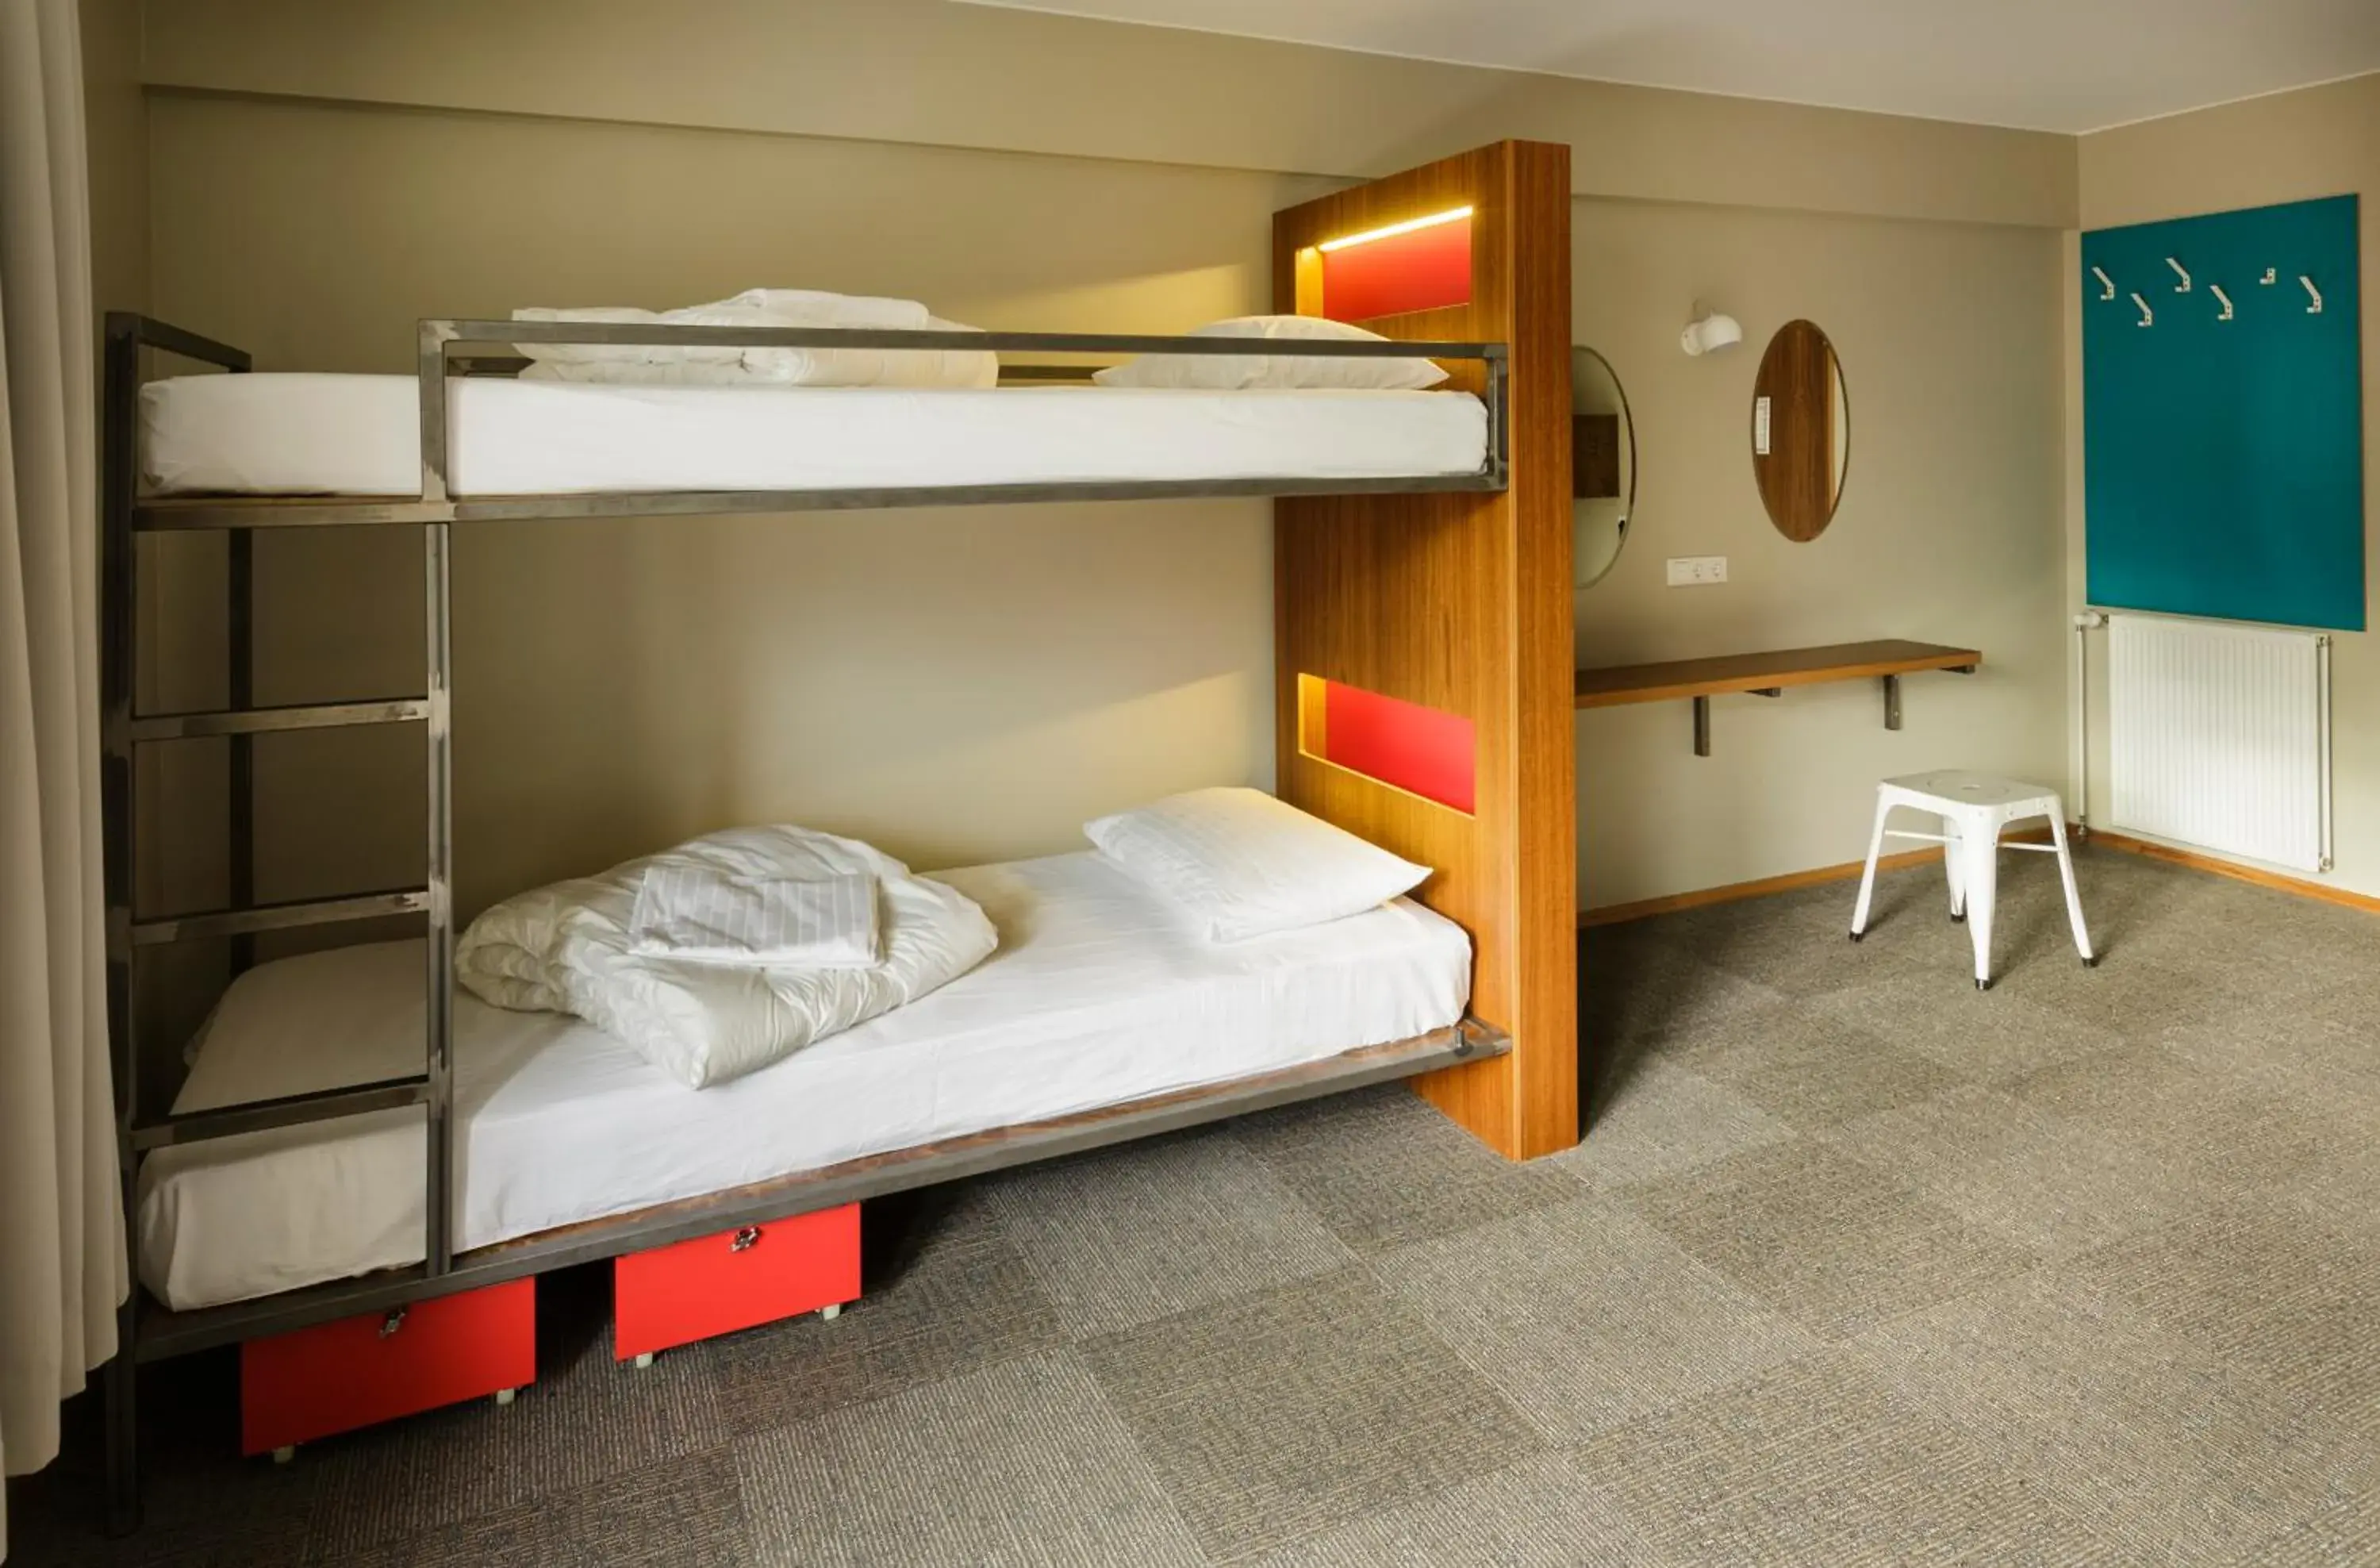 Bedroom, Bunk Bed in Loft - HI Hostel